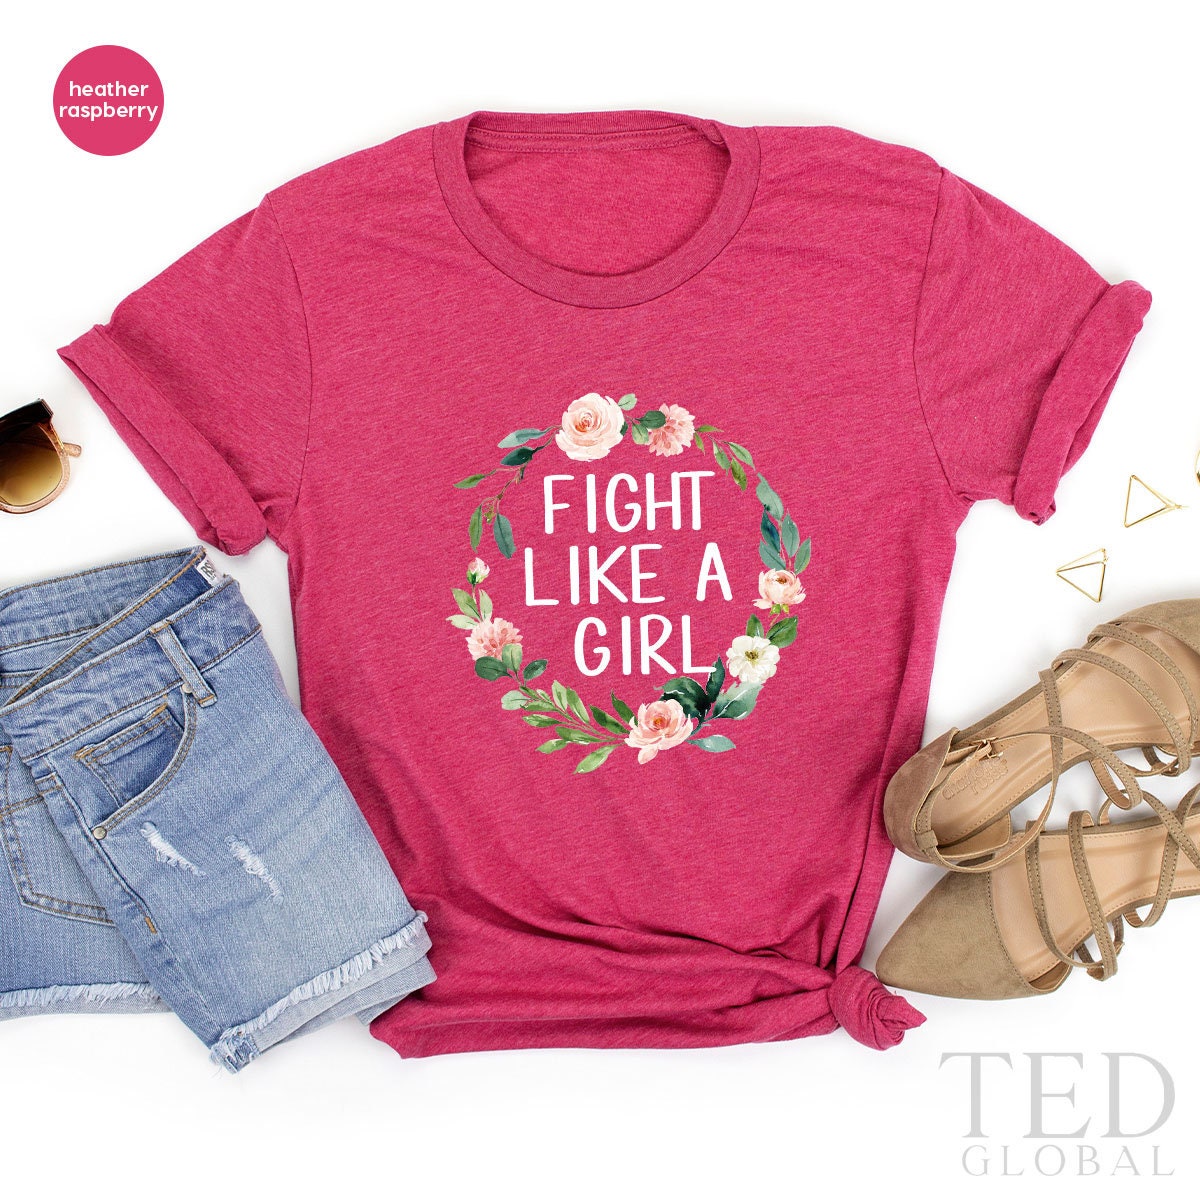 Cancer Shirt, Cancer Awareness T Shirt, Fight Like A Girl T Shirt, Motivational Shirt, Floral Tee, Cancer T-Shirt, Cancer Gift - Fastdeliverytees.com